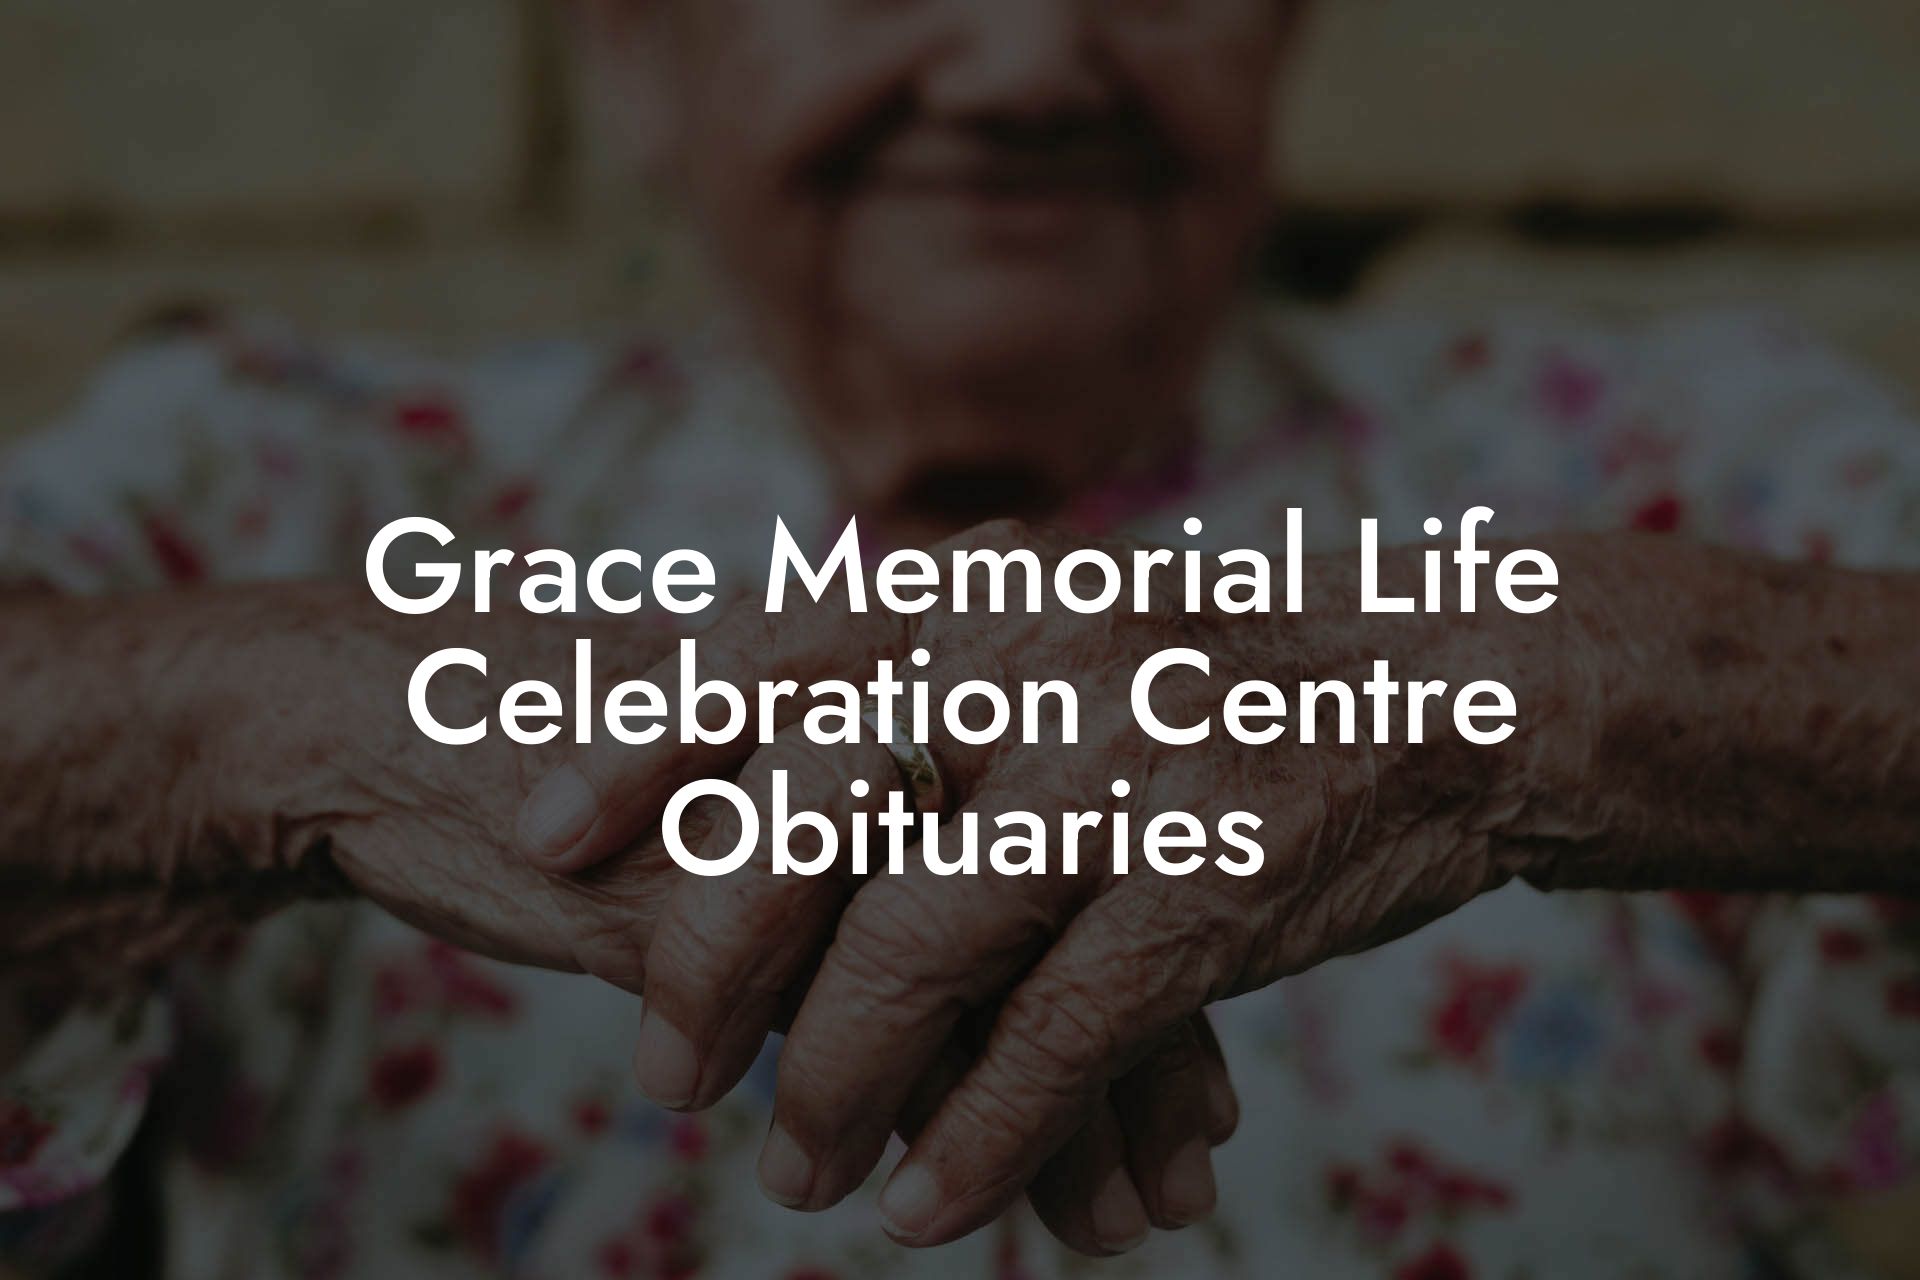 Grace Memorial Life Celebration Centre Obituaries